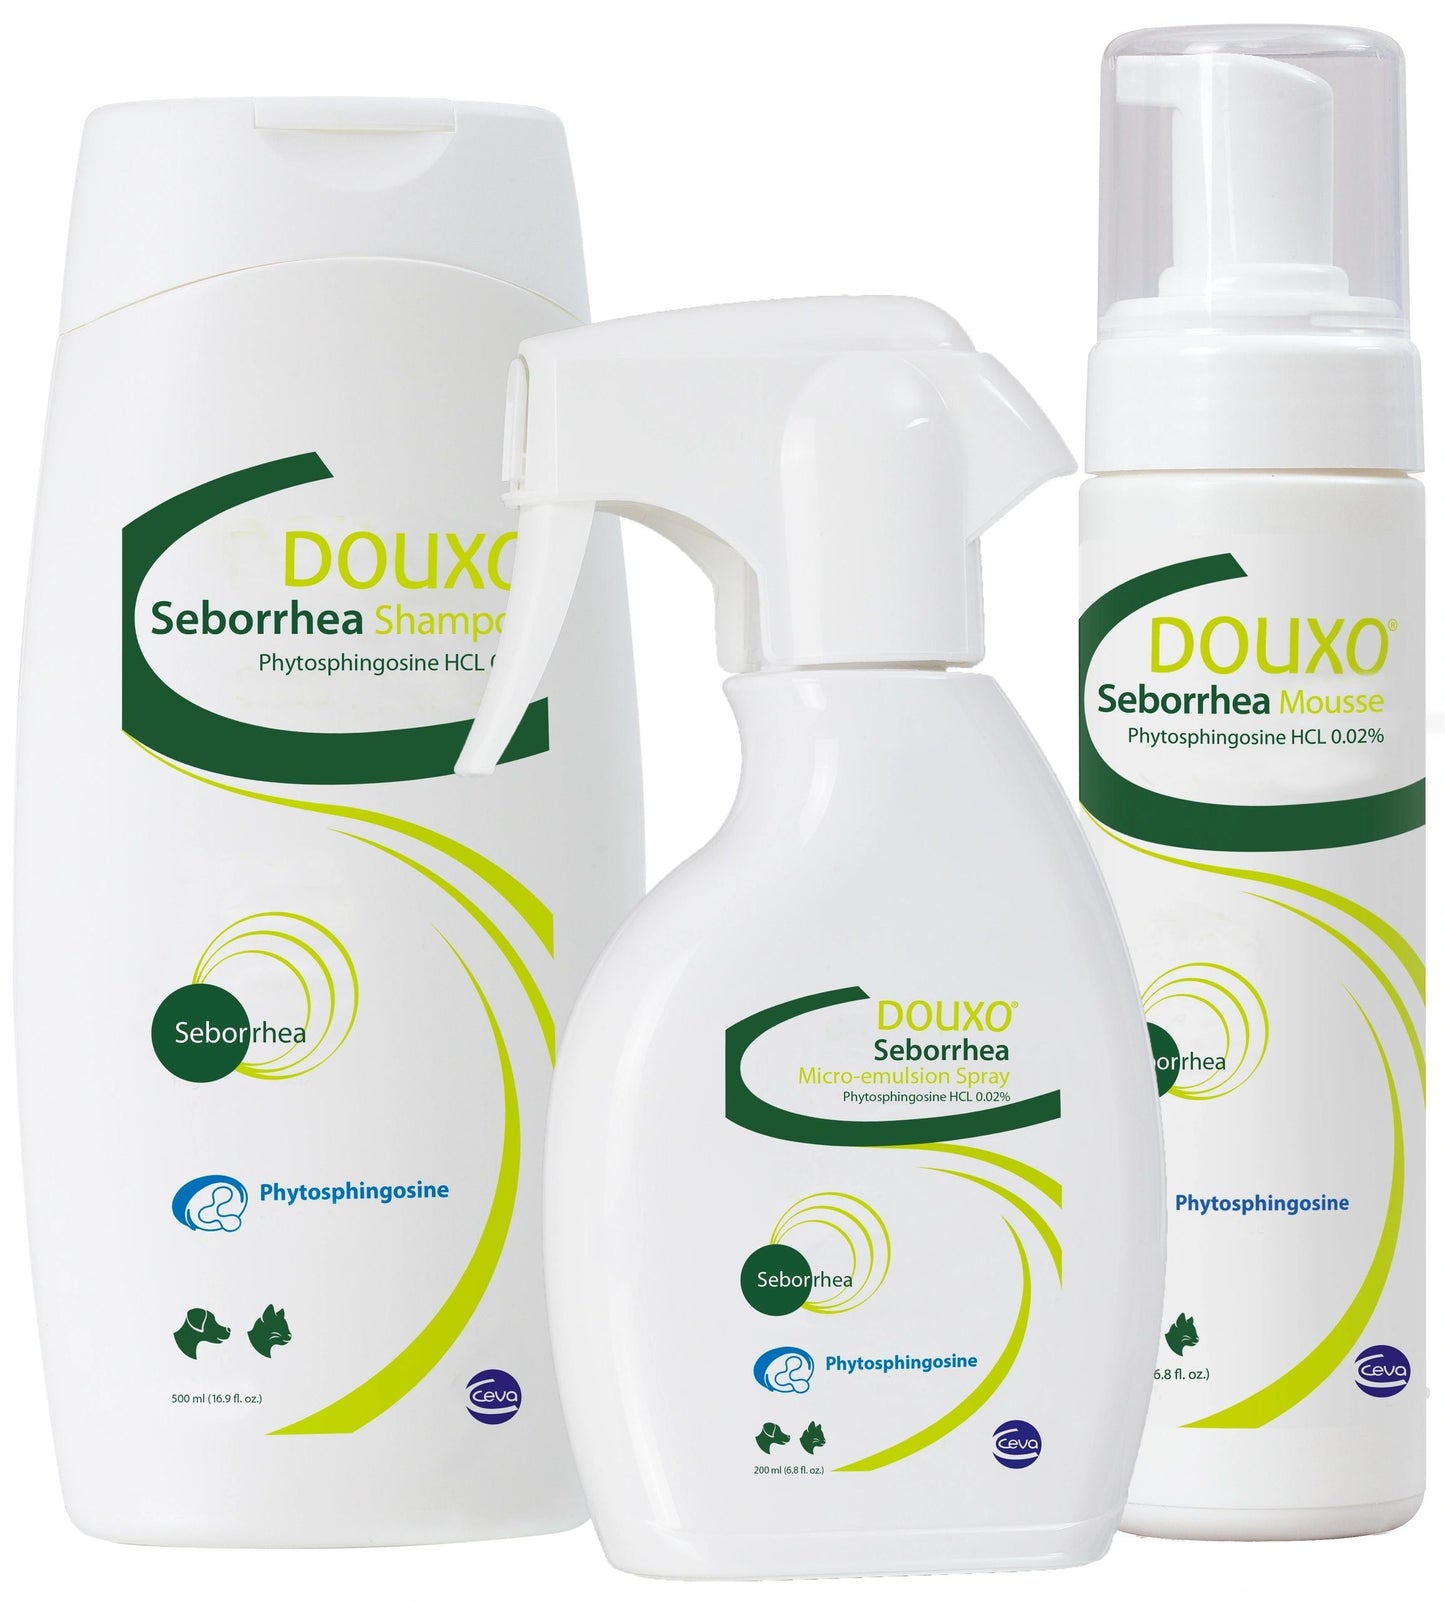 DOUXO® Seborrhea Product Line